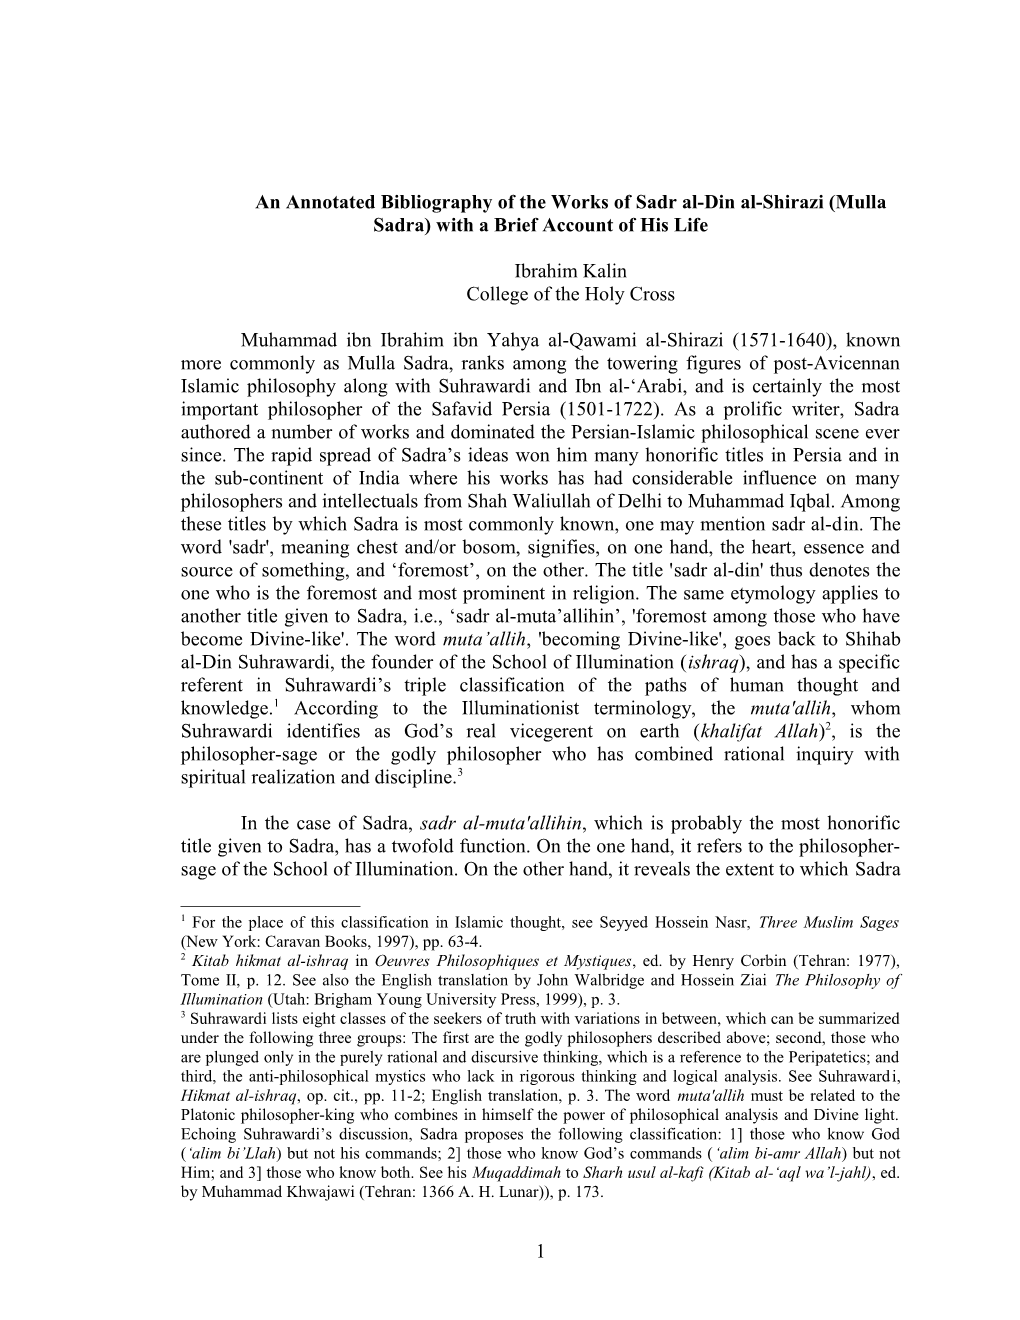 An Annotated Bibliography of the Works of Sadr Al-Din Al-Shirazi (Mulla Sadra) with a Brief